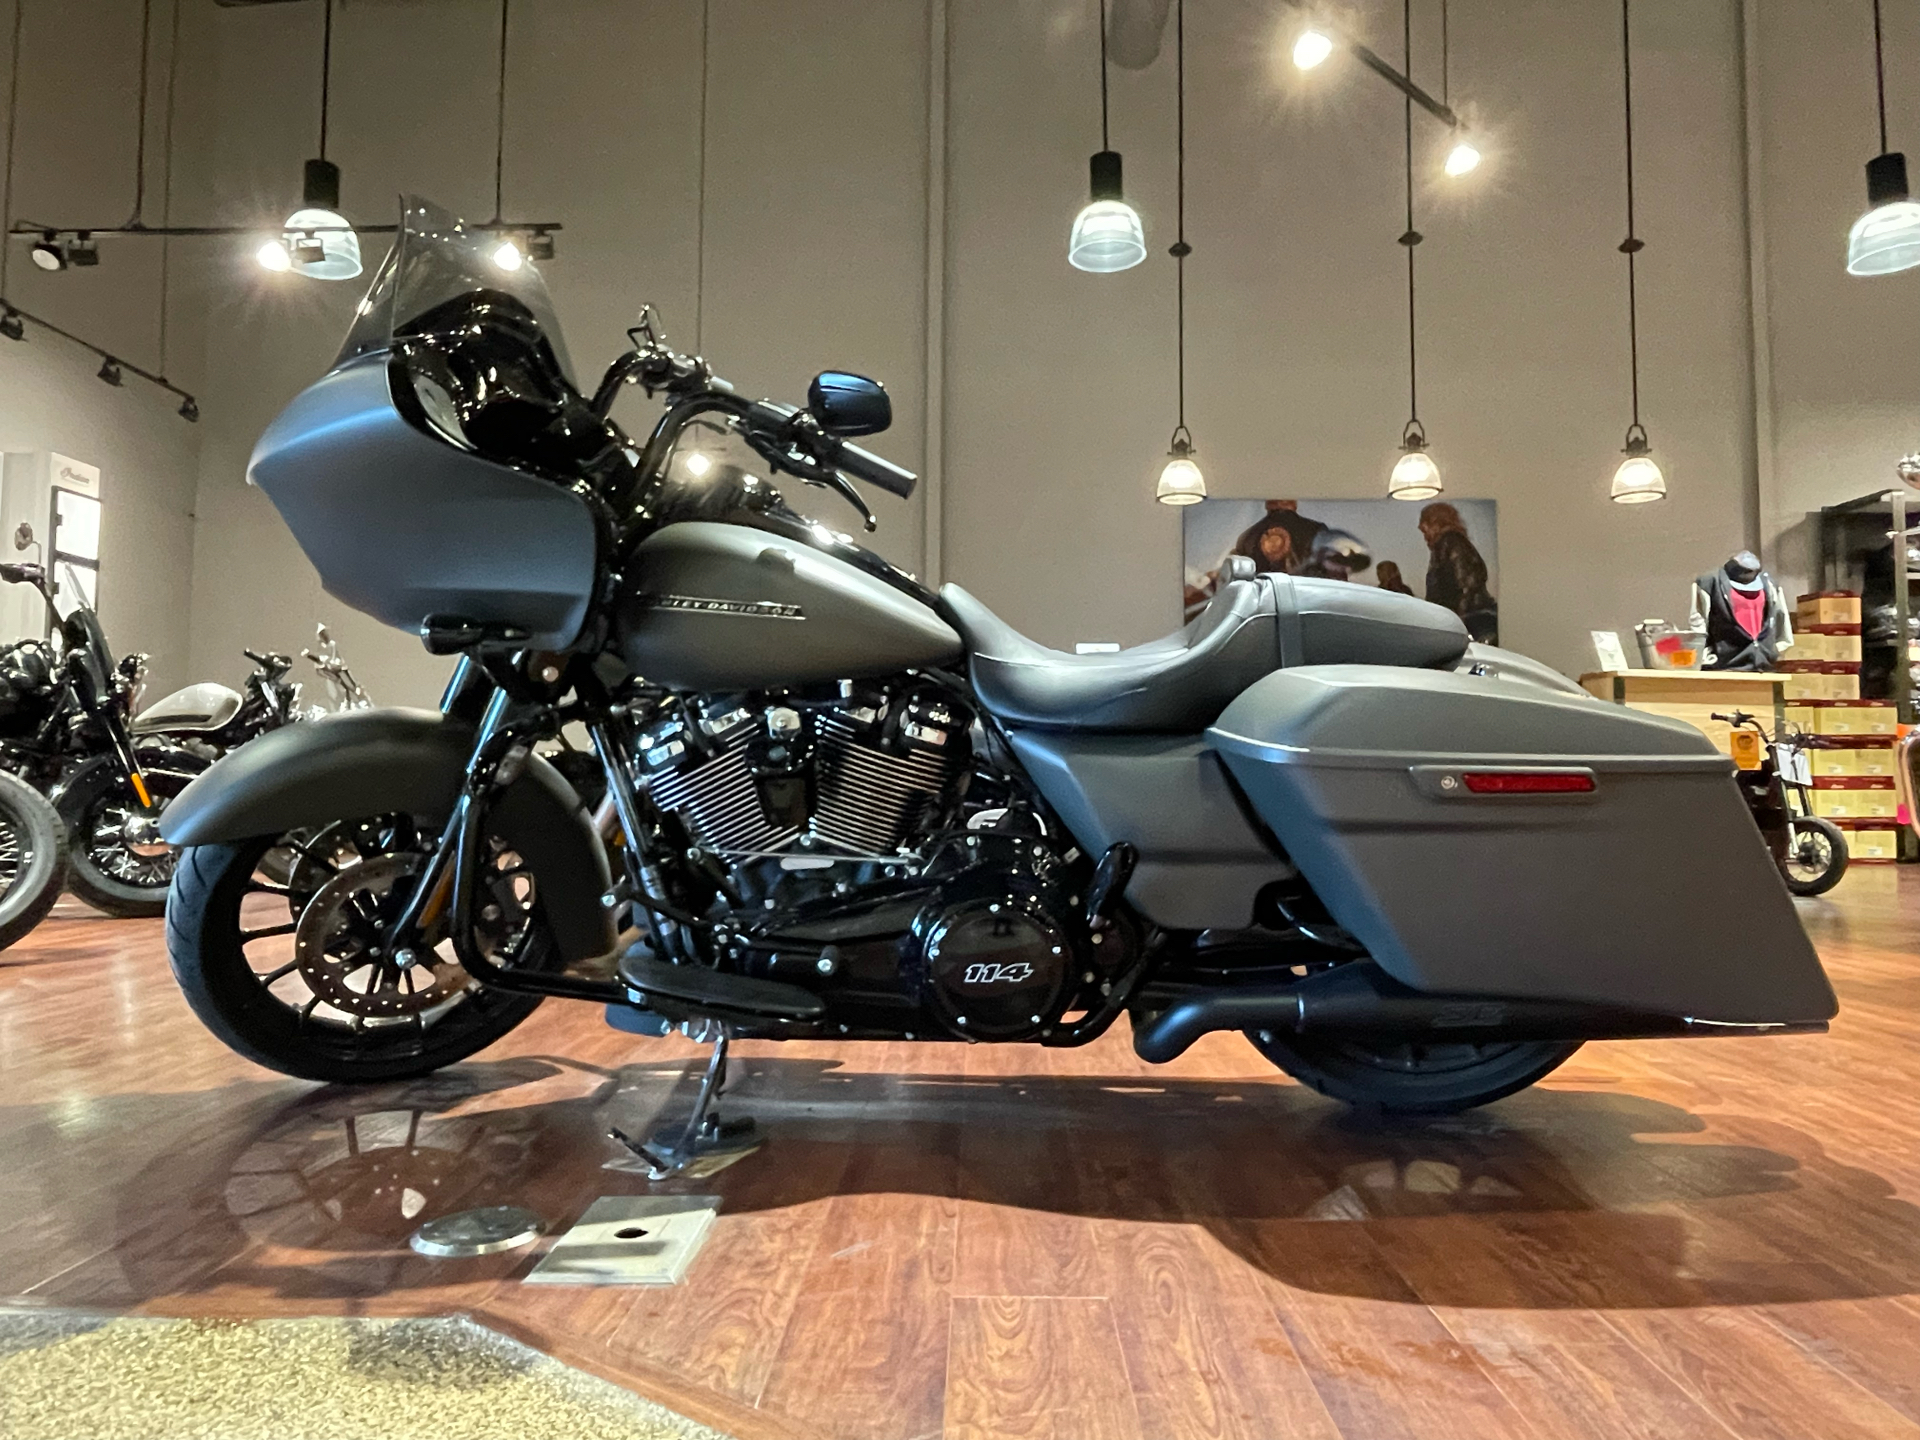 2019 Harley-Davidson Road Glide® Special in Dansville, New York - Photo 2